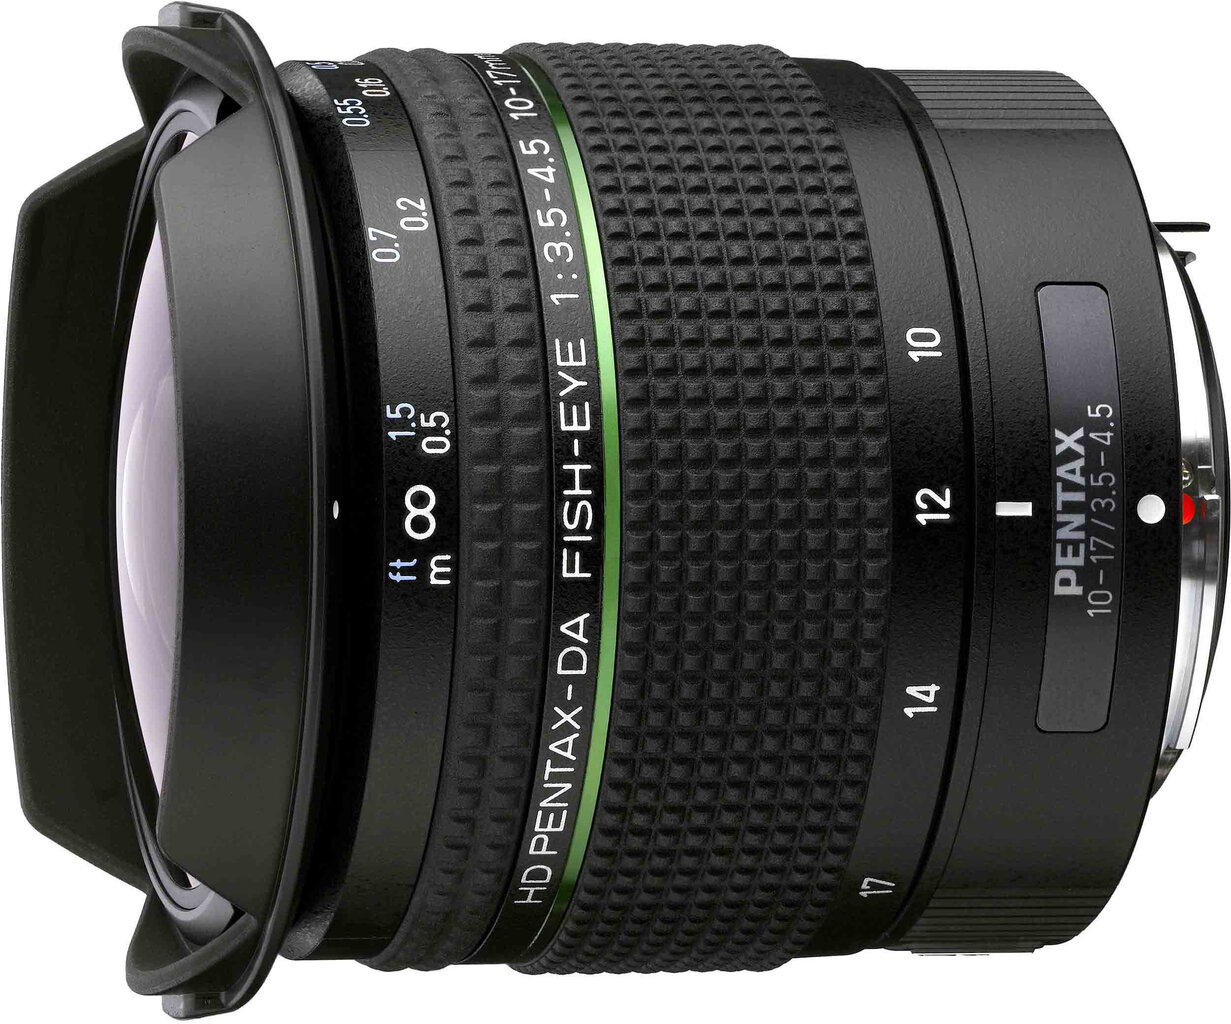 HD Pentax DA 10-17mm f/3.5-4.5 ED objektiiv hind ja info | Objektiivid | kaup24.ee